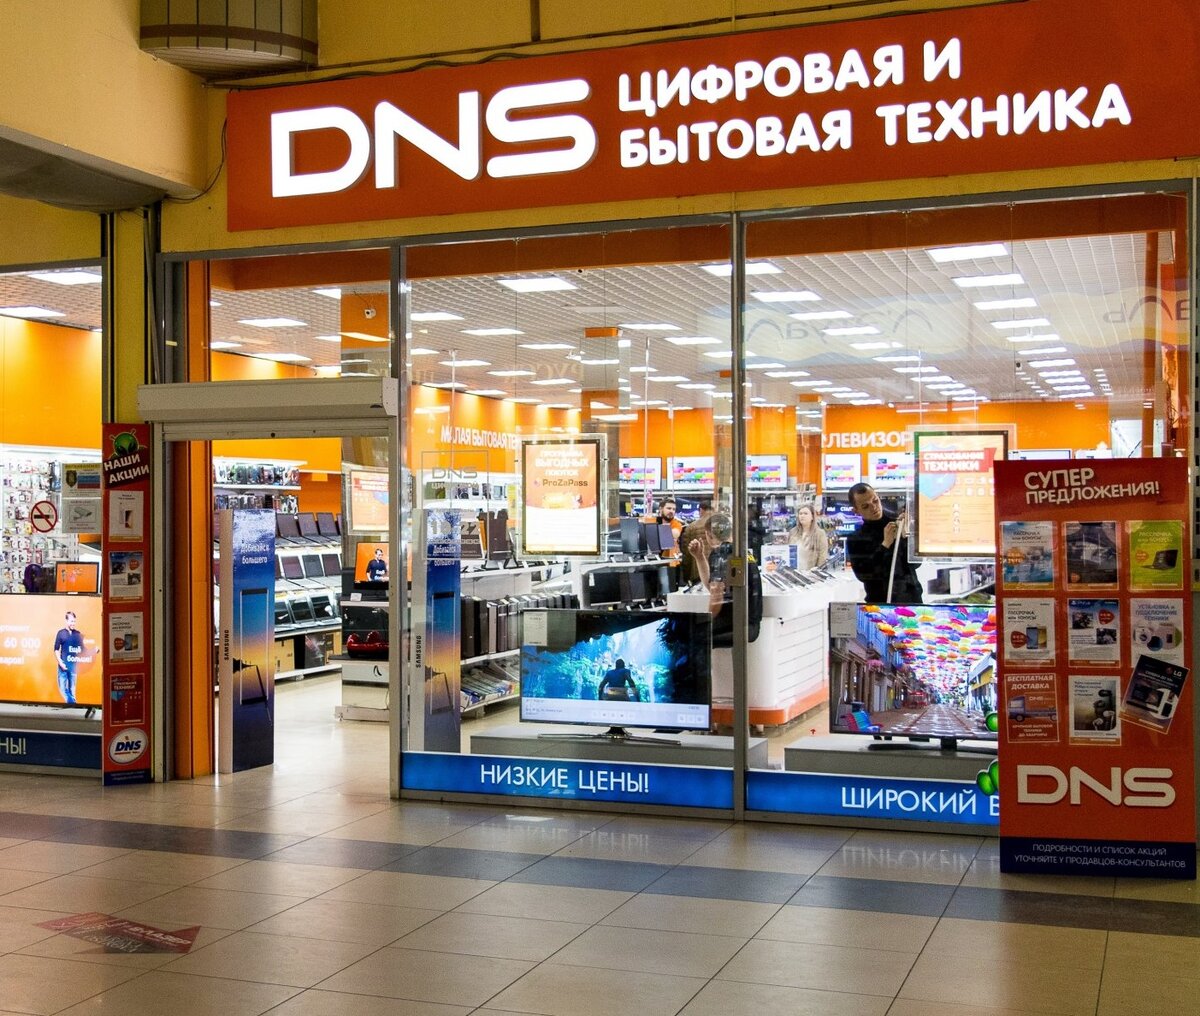 Сайт днс брянск. ДНС. DNS цифровая и бытовая техника. Магазин ДНС. ДНС Ритейл.